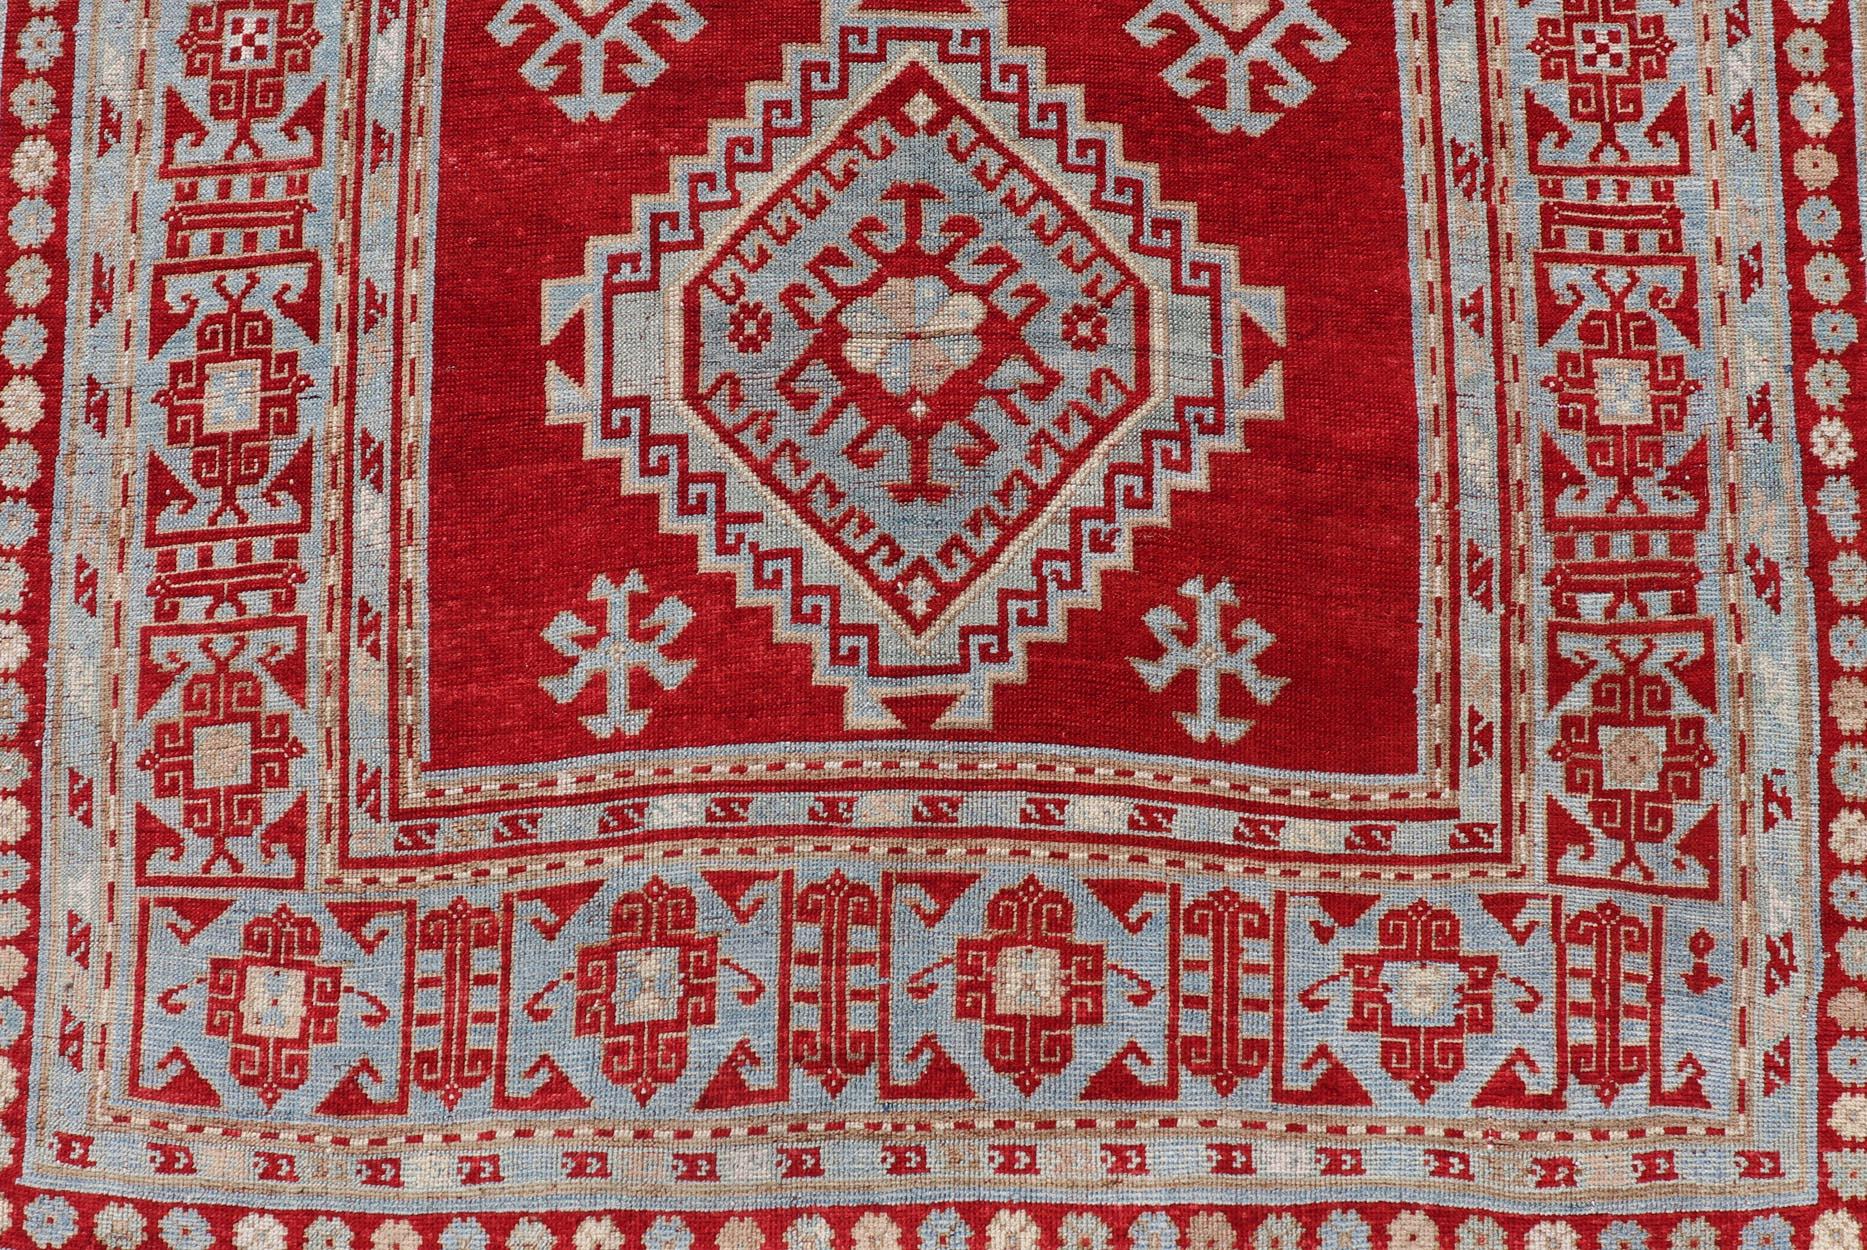 Antique Caucasian Kazak Gallery Rug in Brilliant Red with Geometric Design For Sale 3